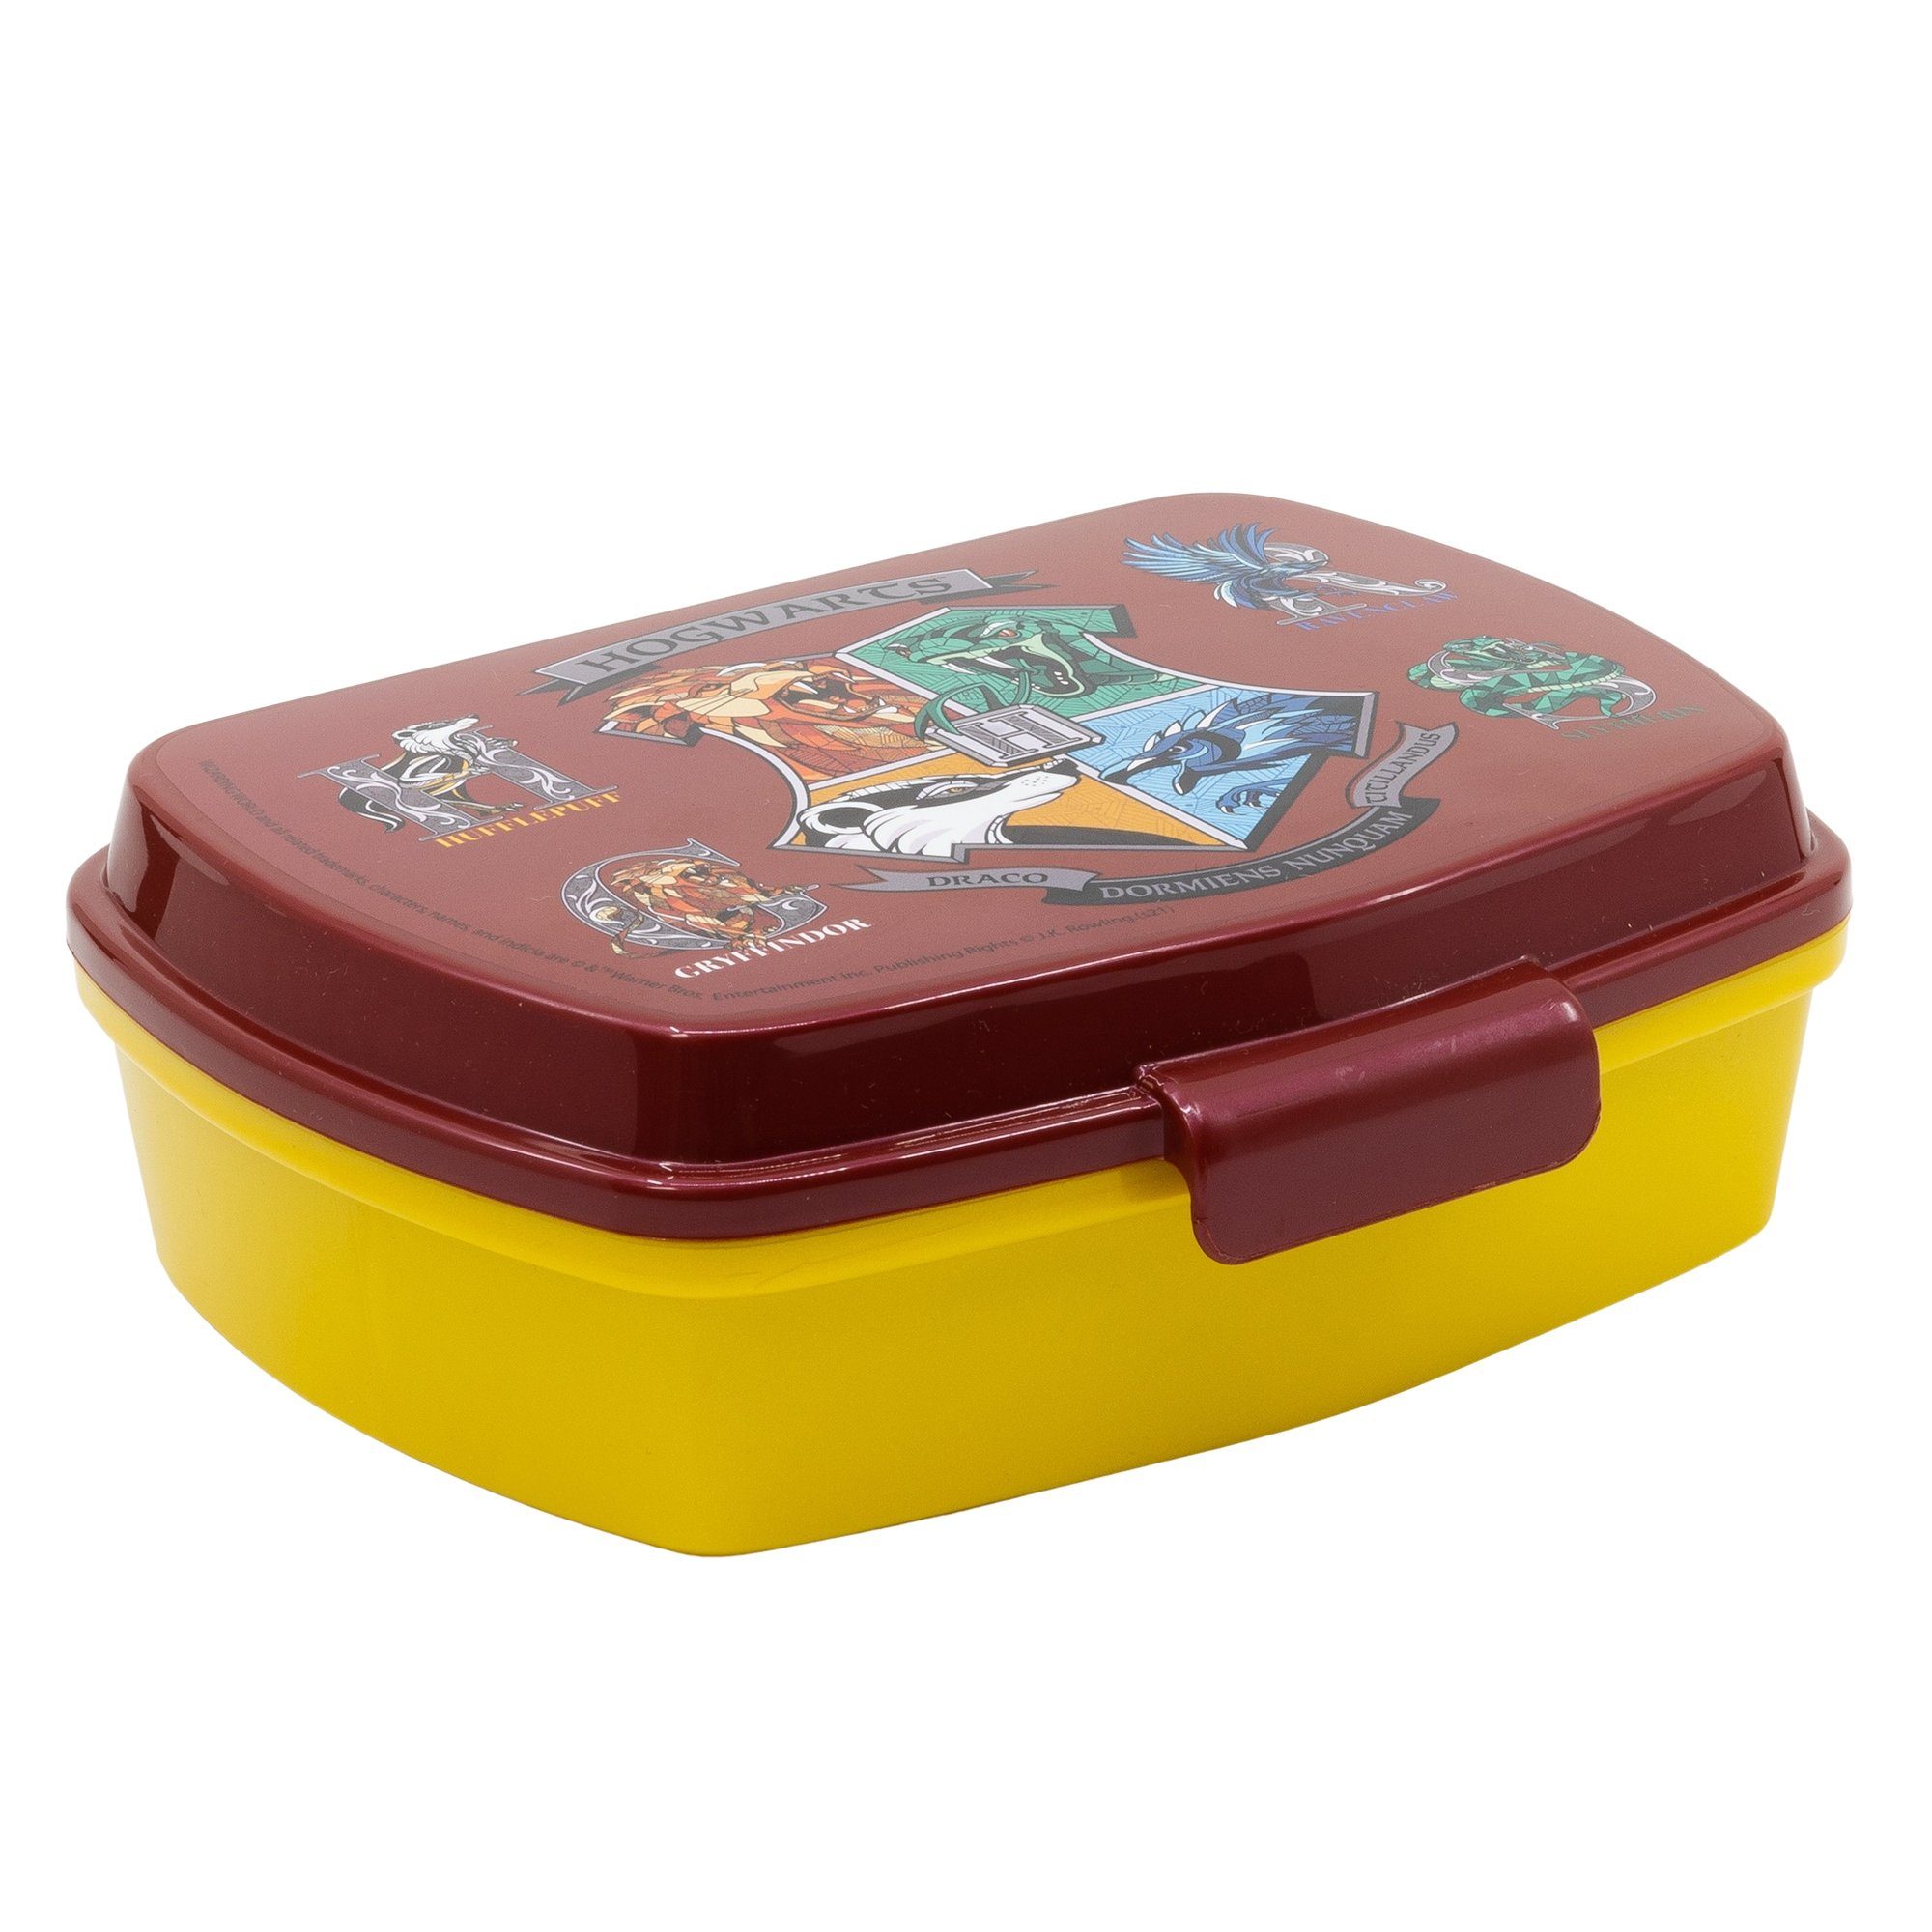 Hogwarts Trinkbecher, und - teiliges Brotdose Lunch (2-tlg) 2 Harry Potter Lunchbox Set